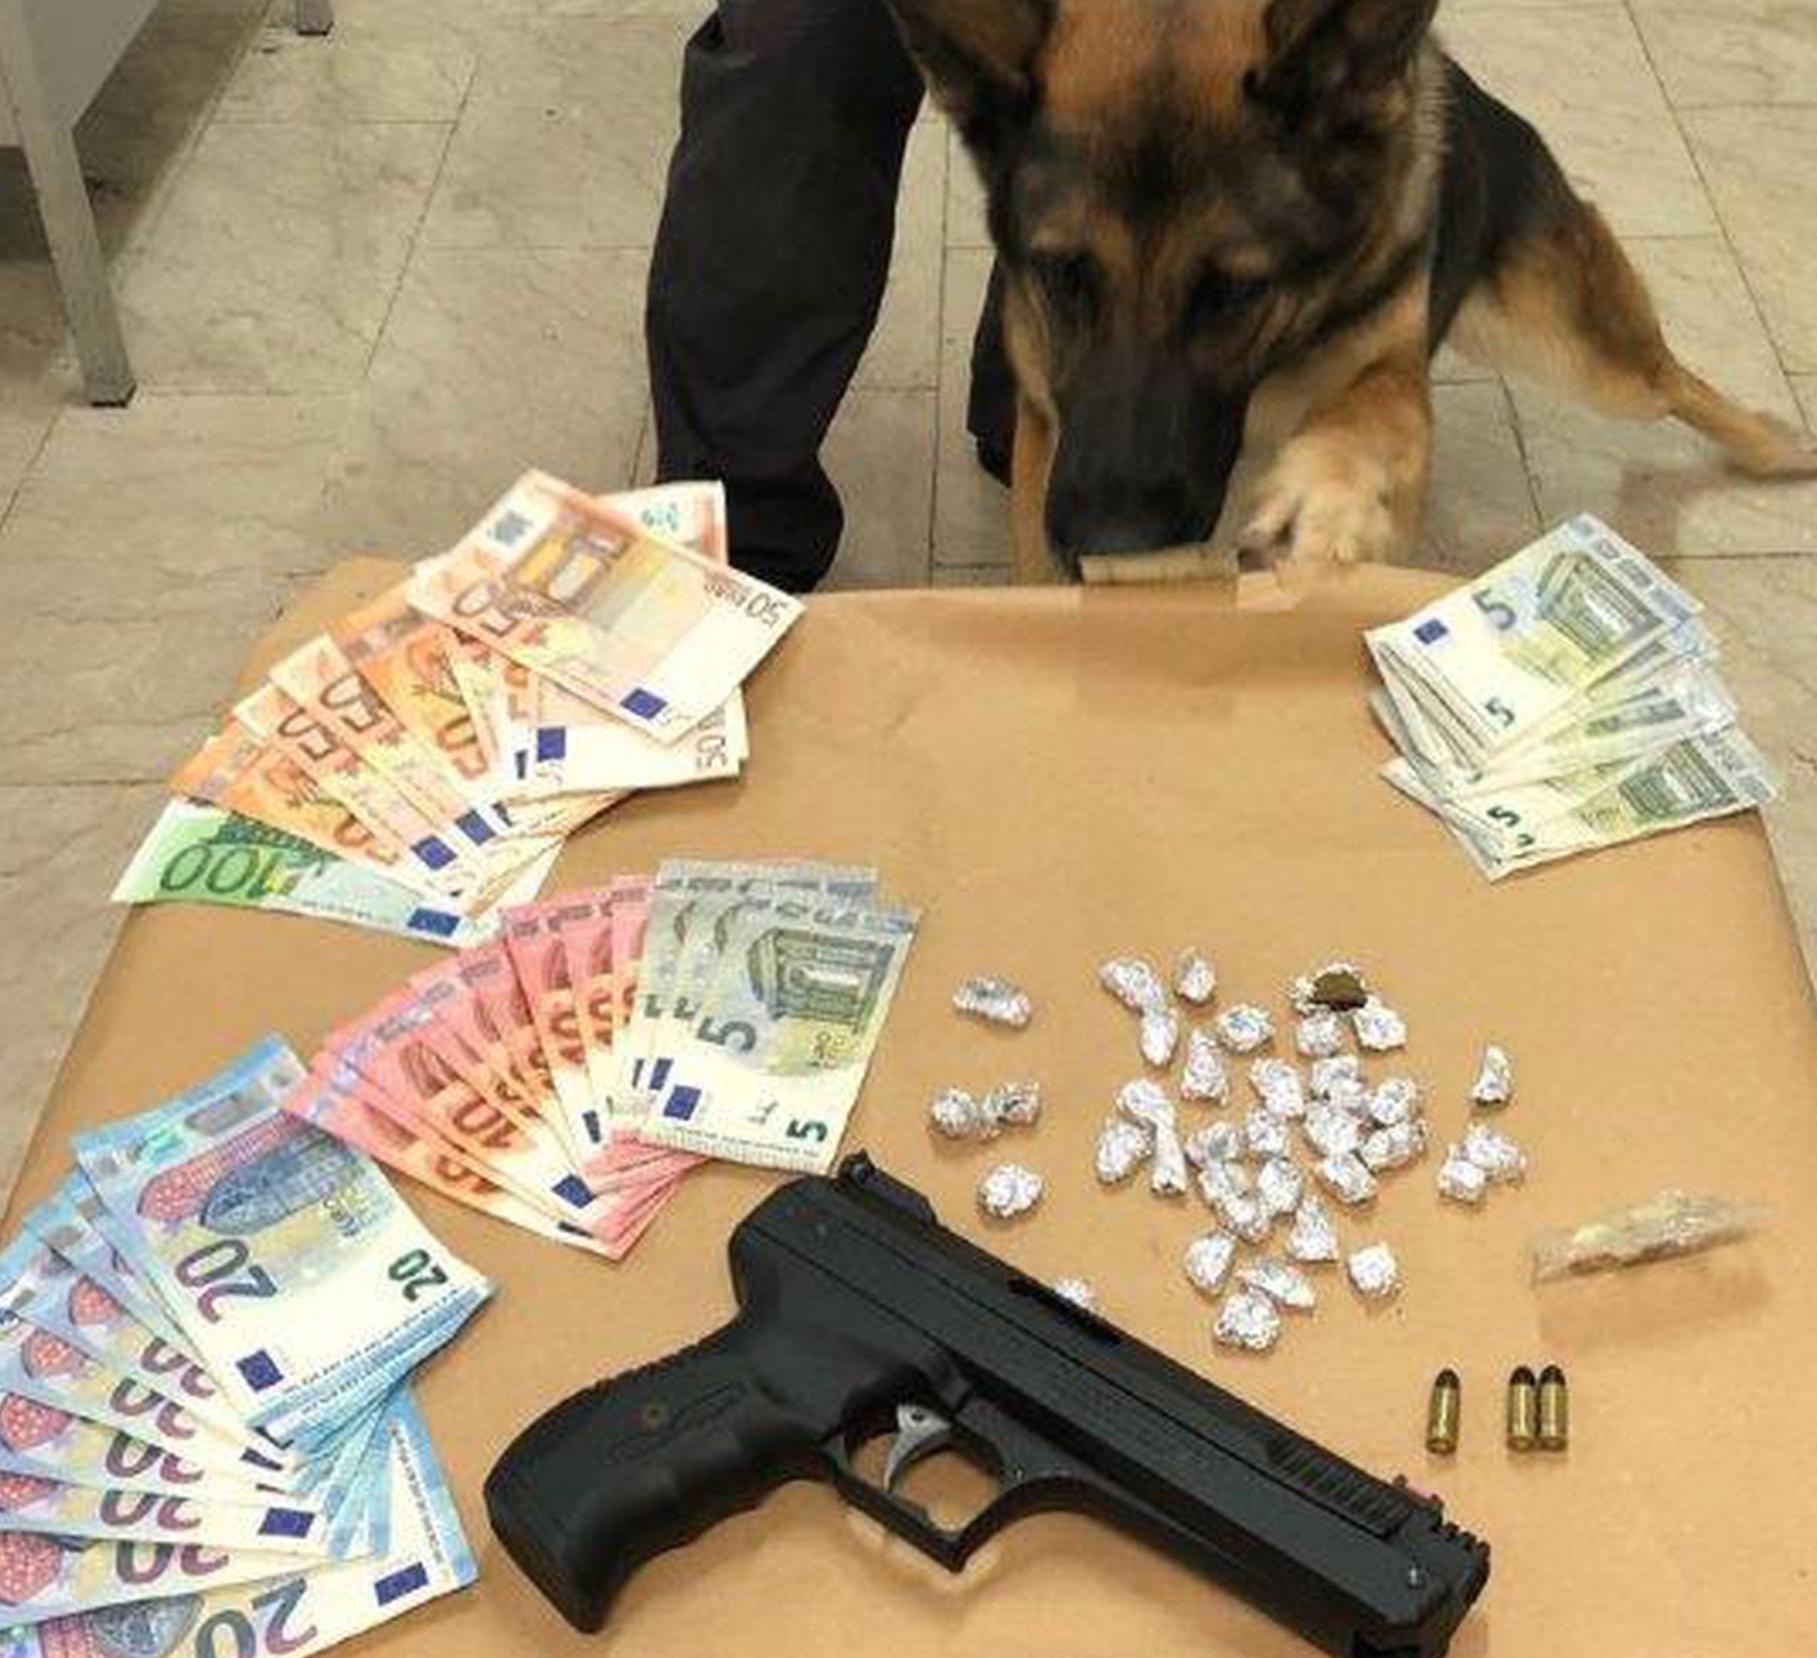 Droga, soldi cash e una pistola a Siracusa: due persone arrestate